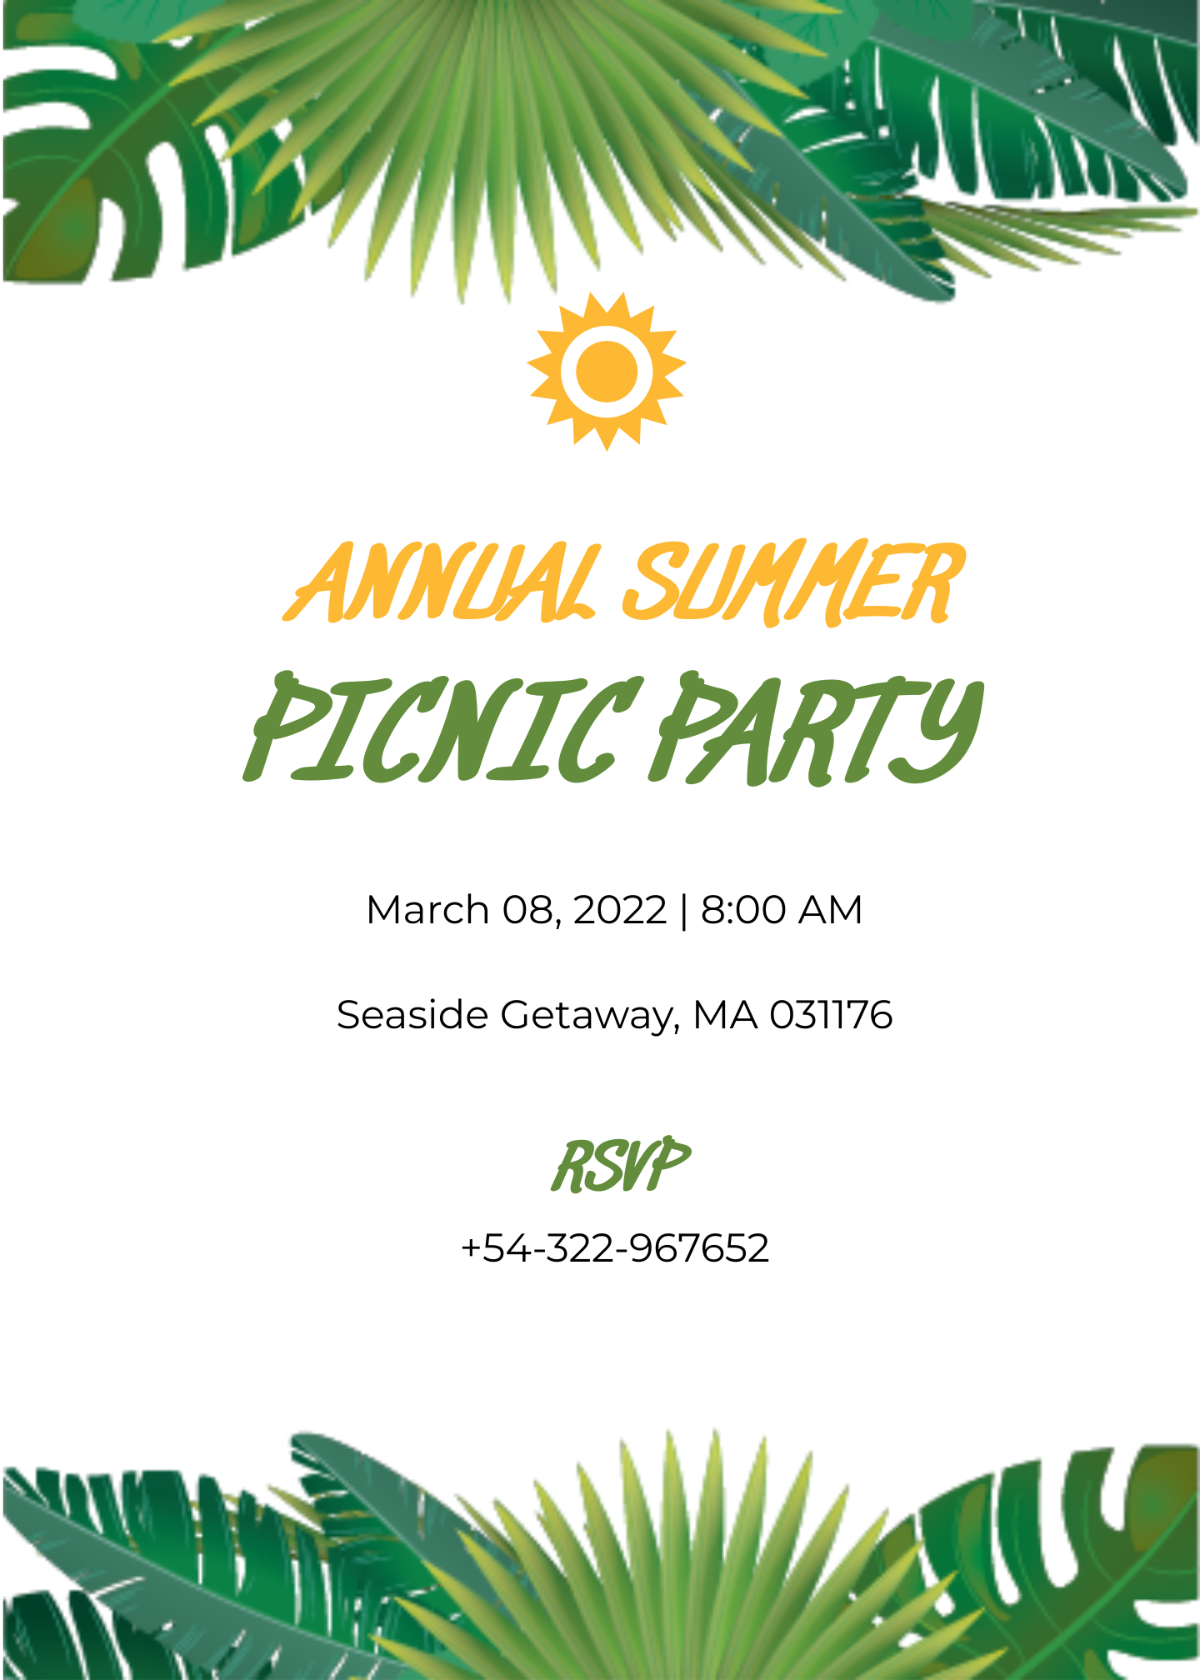 Summer Picnic Party Invitation Template